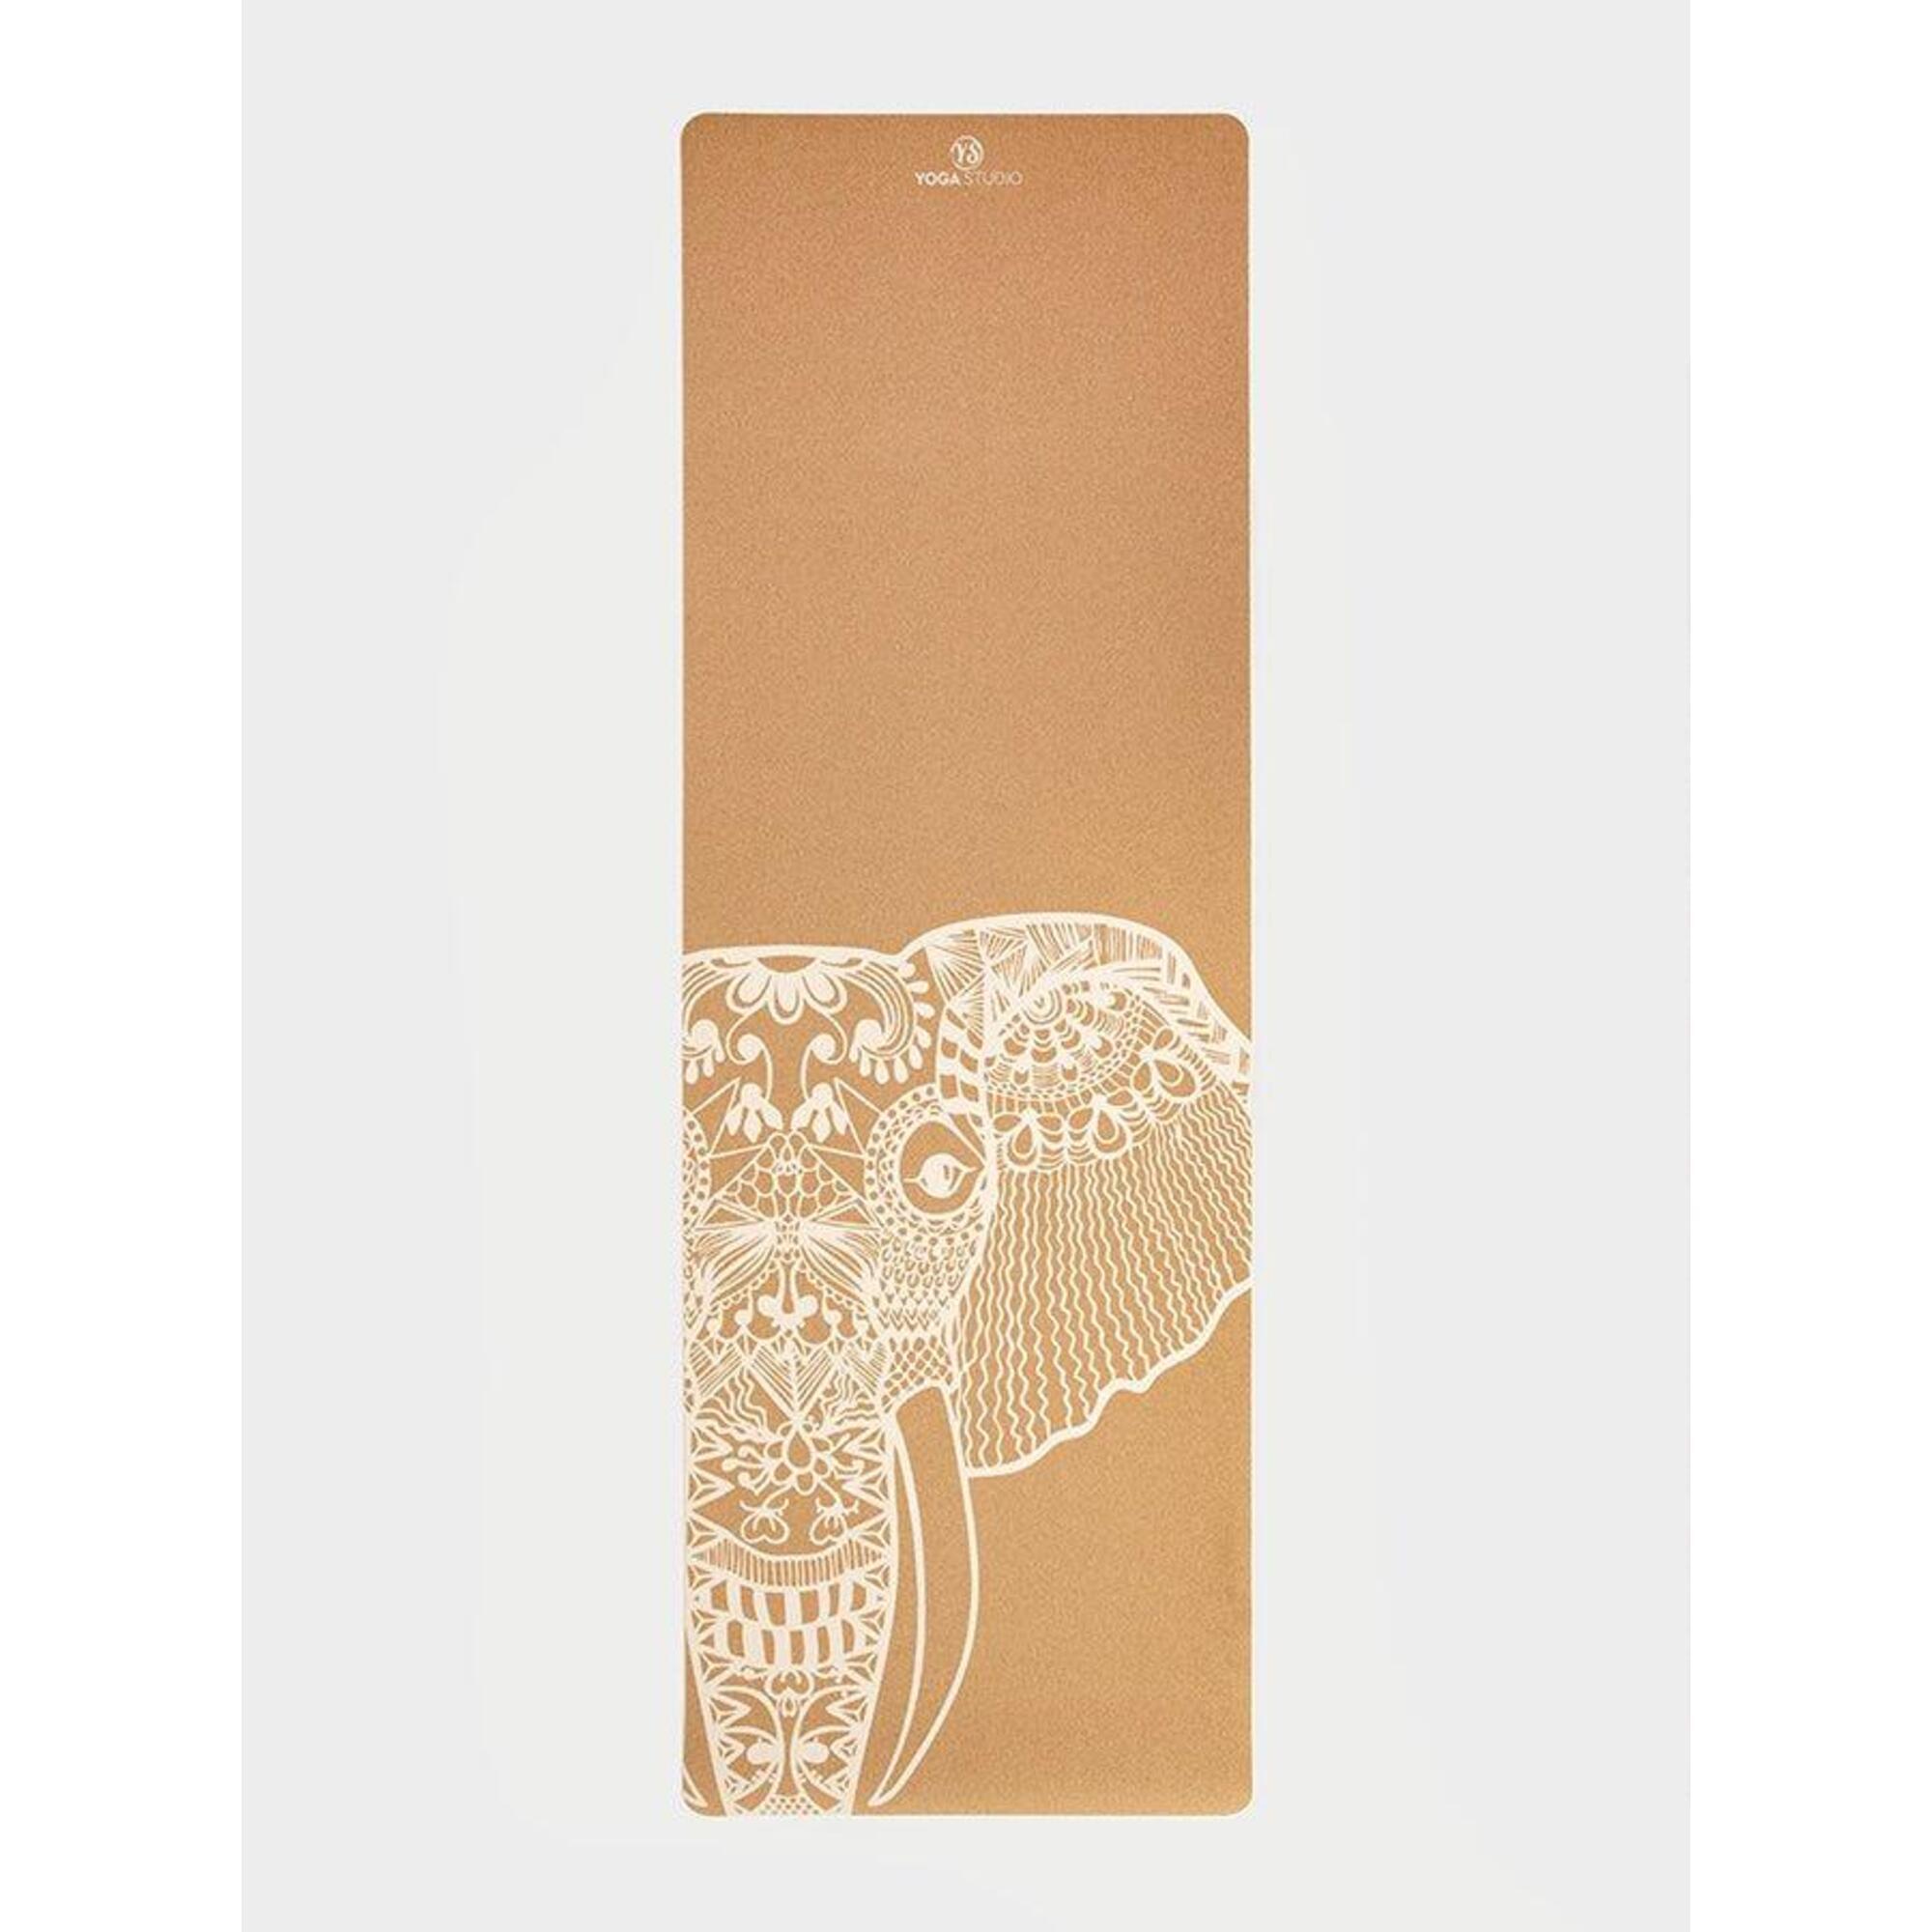 Yoga Studio Elephant Cork Yoga Mat 4mm - White Elephant 1/4